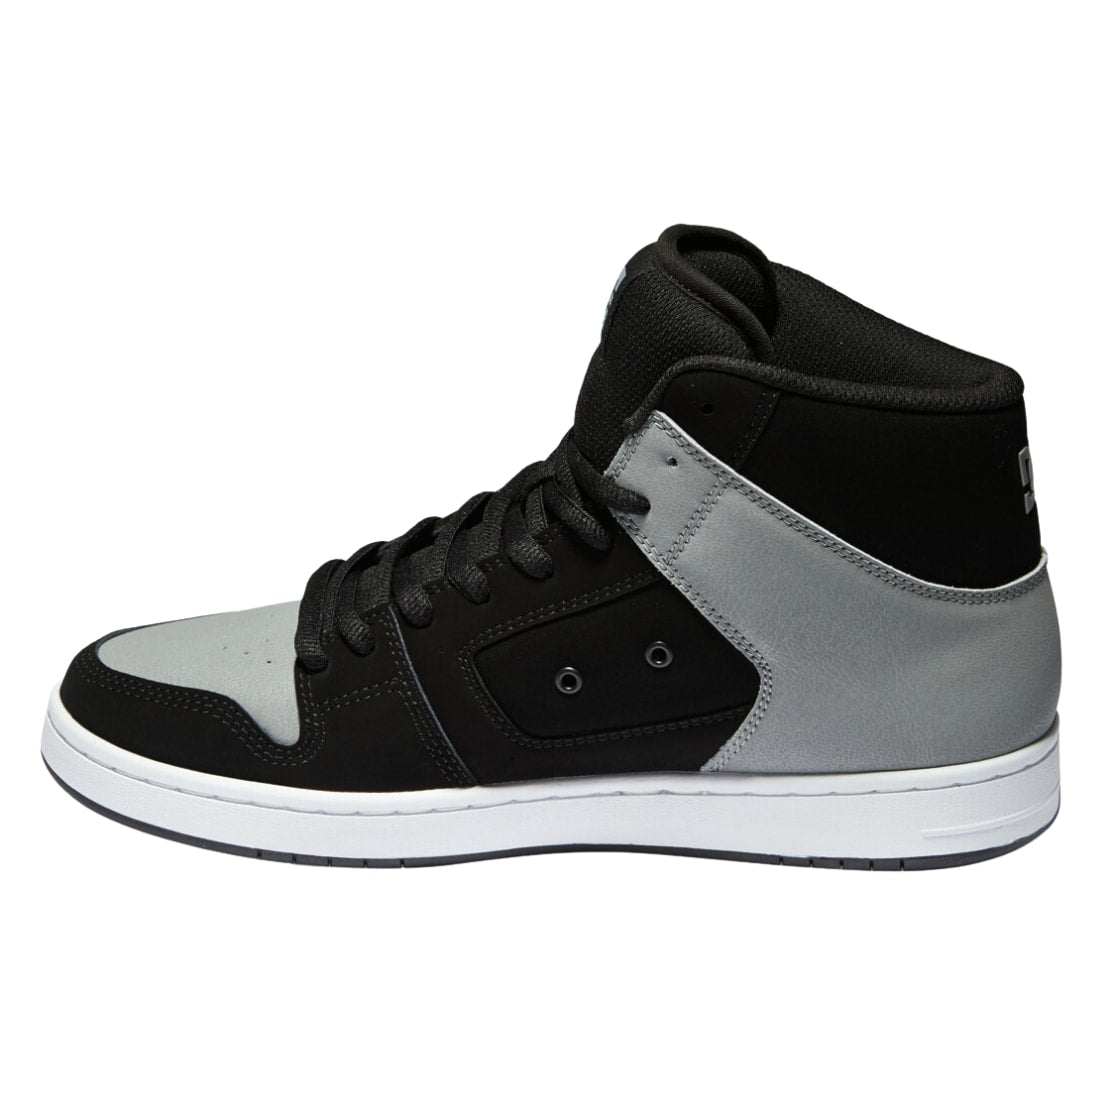 Dc Manteca 4 Hi-Top Shoes - Black/Grey - Mens Skate Shoes by DC